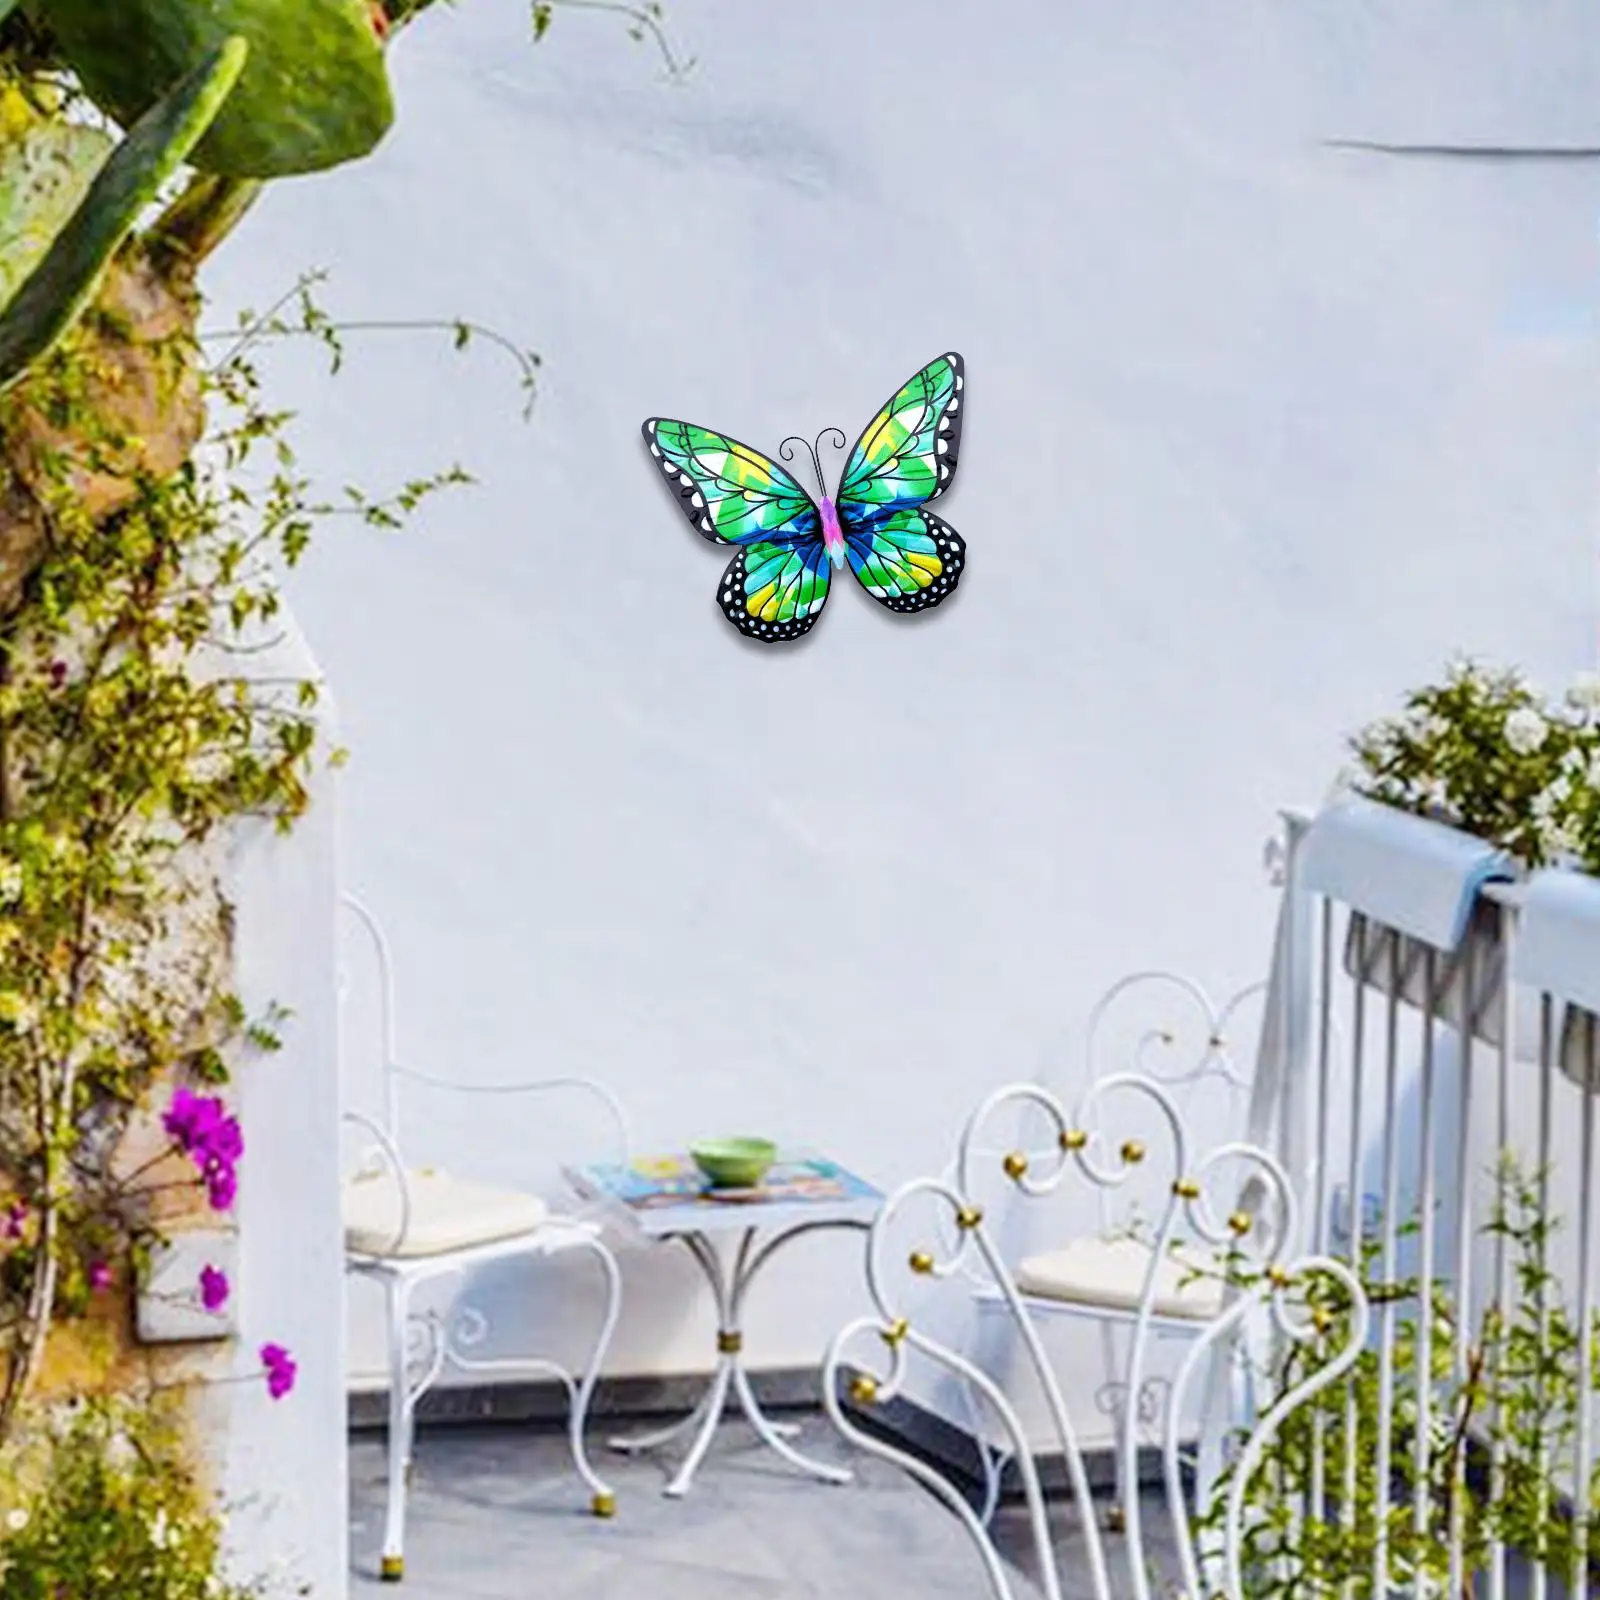 metal butterflies Wall Decor Beautiful Decorative 9.84`` wing metal butterflies Sculptures for Deck Yard Porch Patio Outdoor